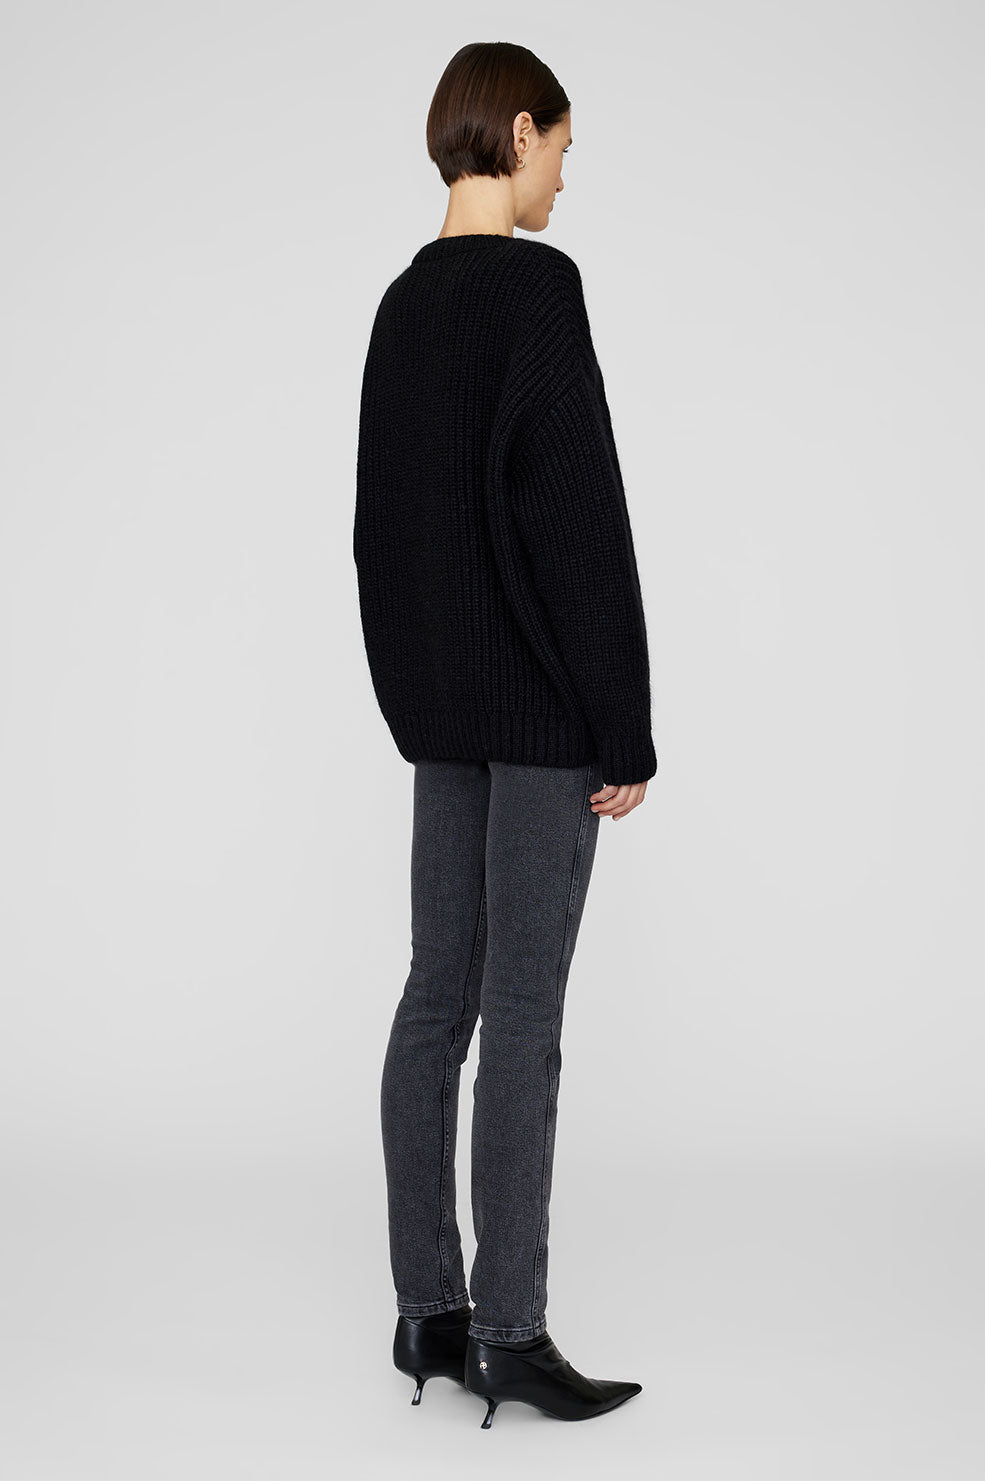 Anine Bing - Sydney Crew Sweater in Black